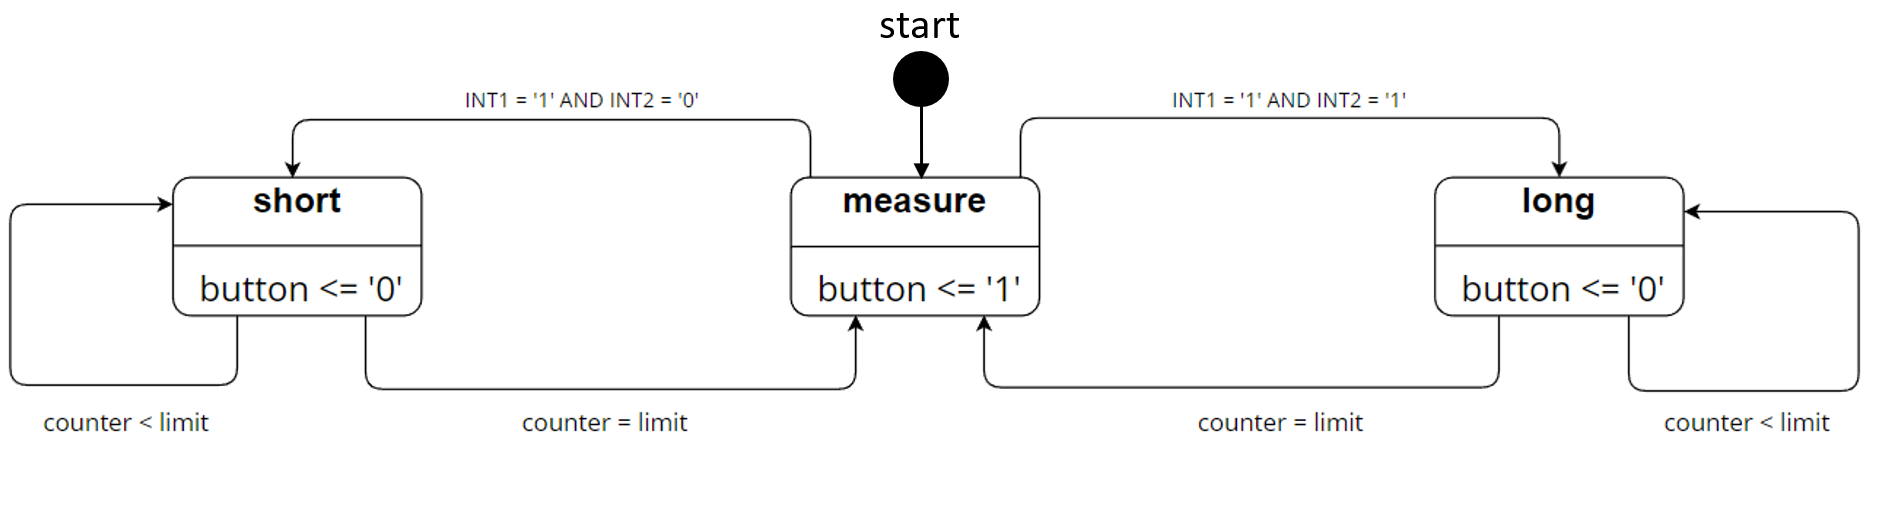 Finite State Machine der Entity Tap_Button_Generator